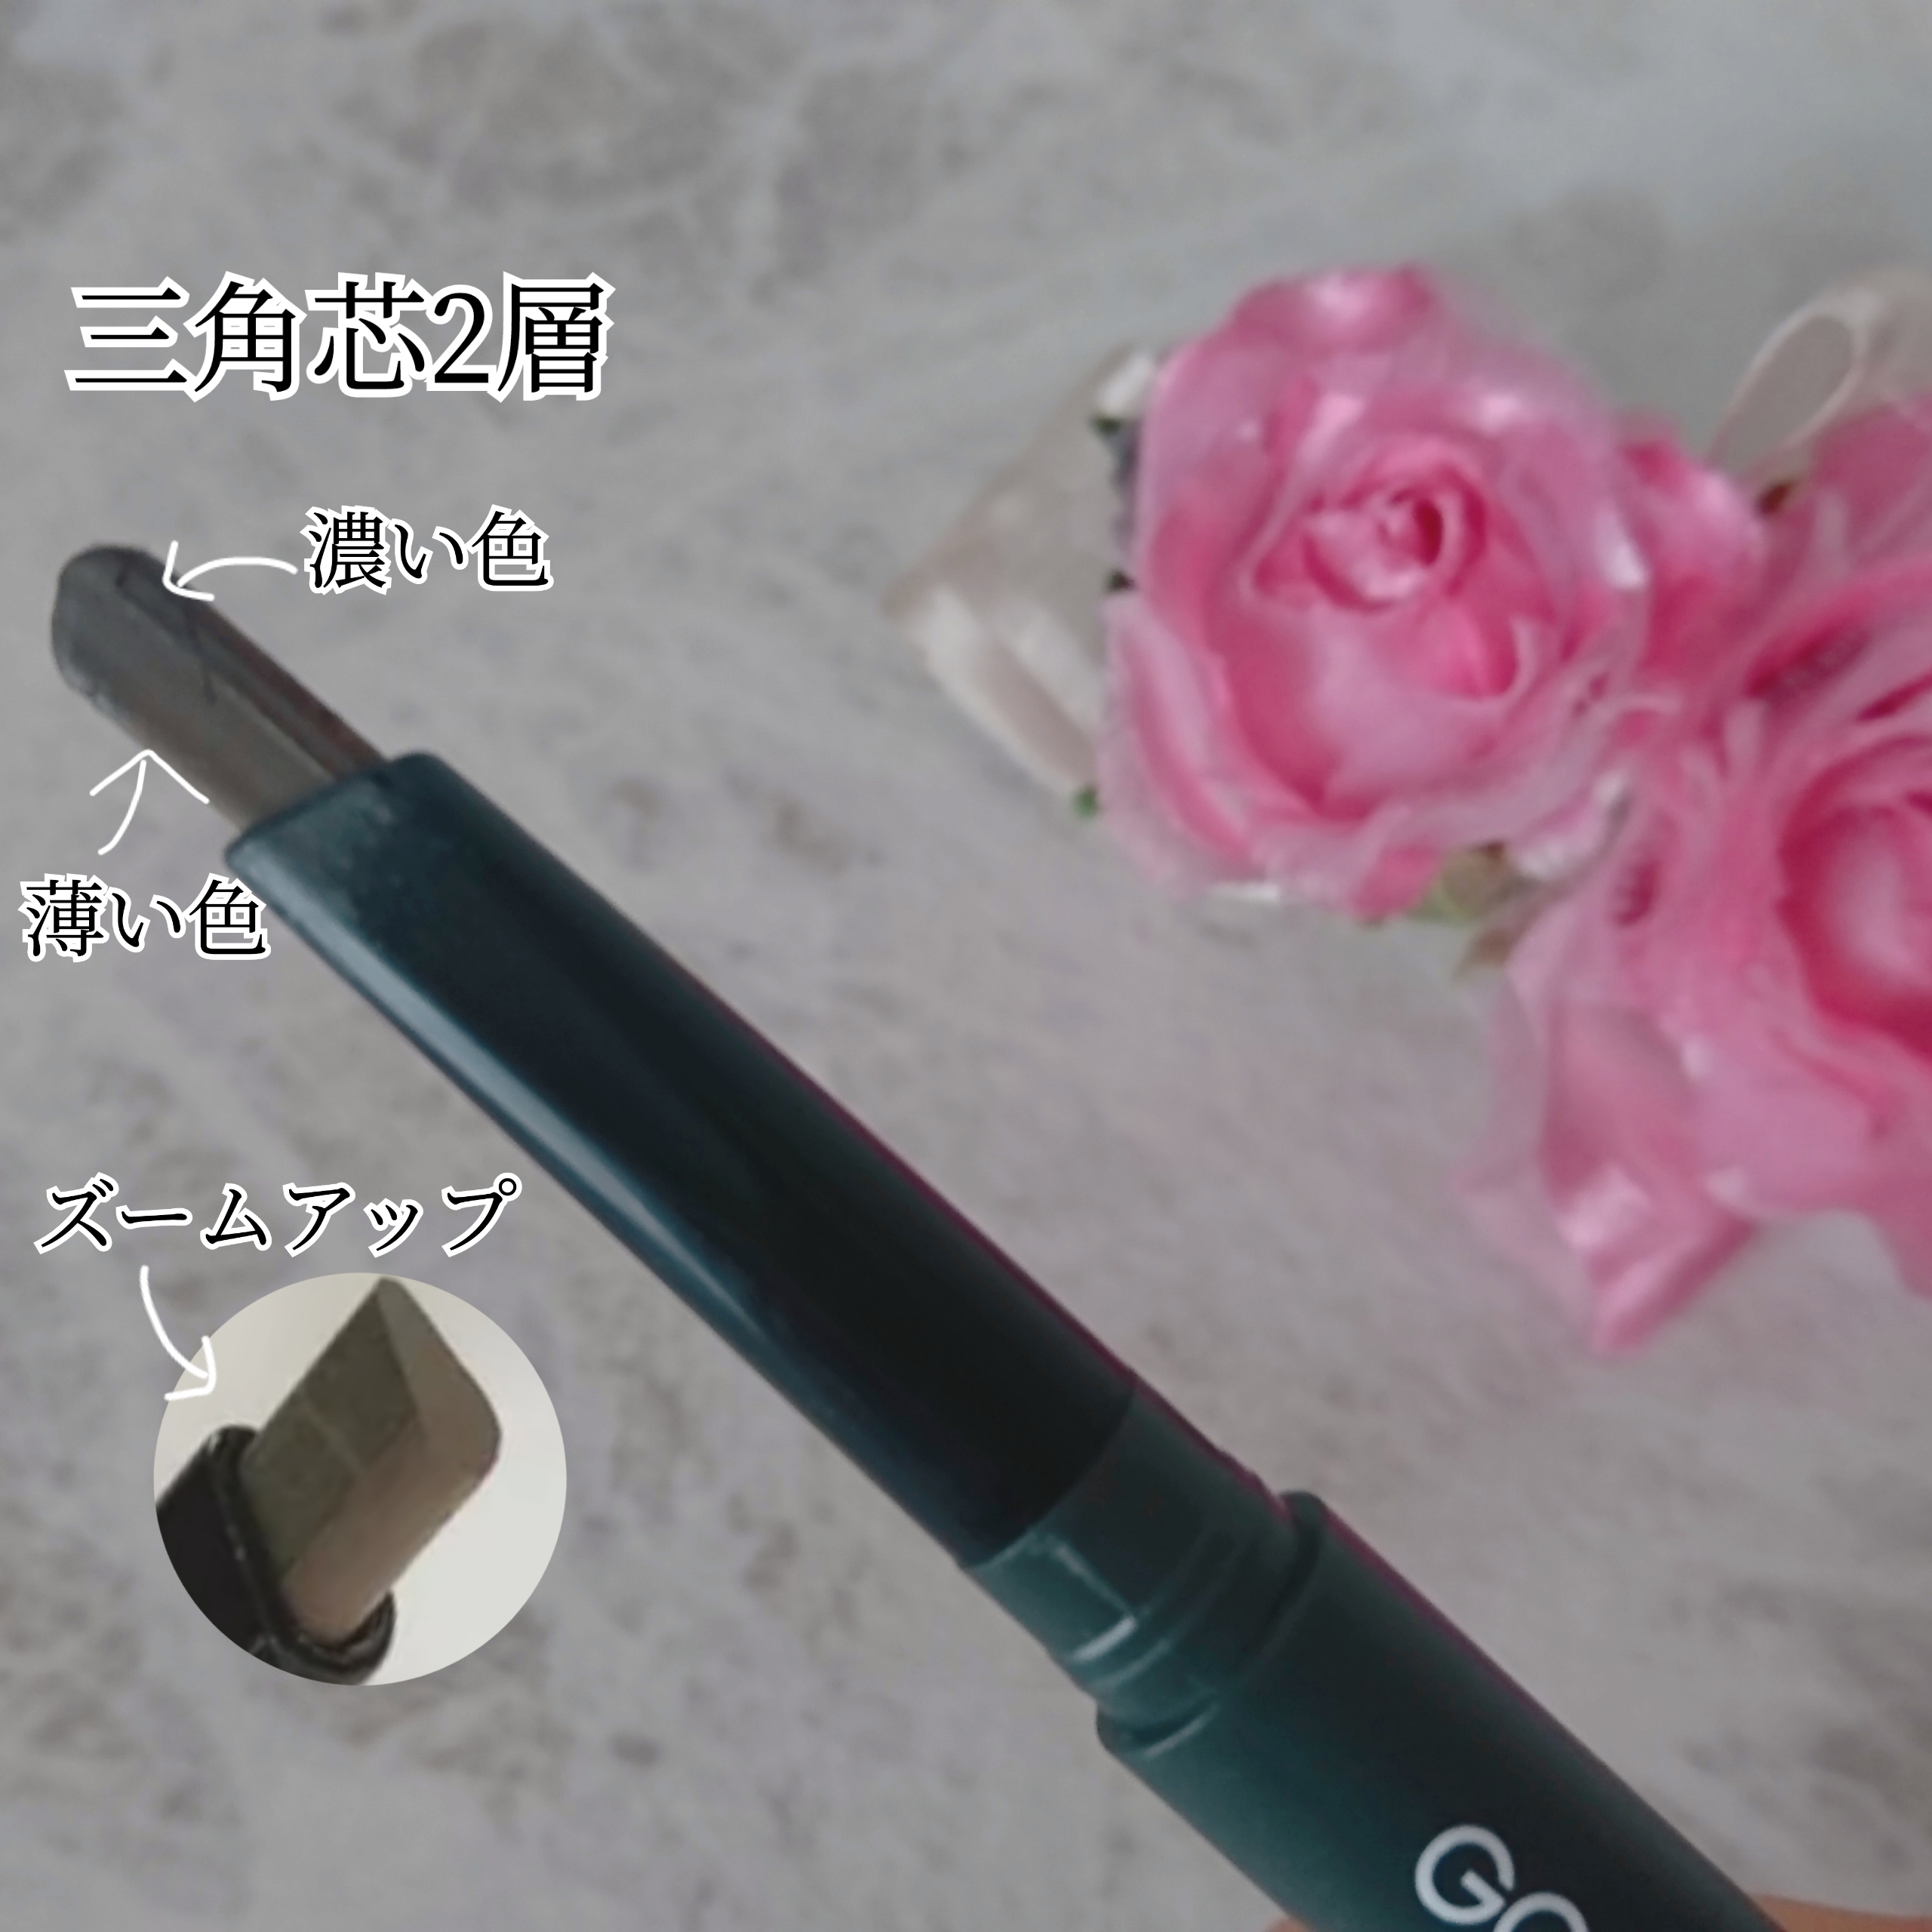 GENETOKYO ツートンカラーアイブロウペンシルを使ったYuKaRi♡さんのクチコミ画像4